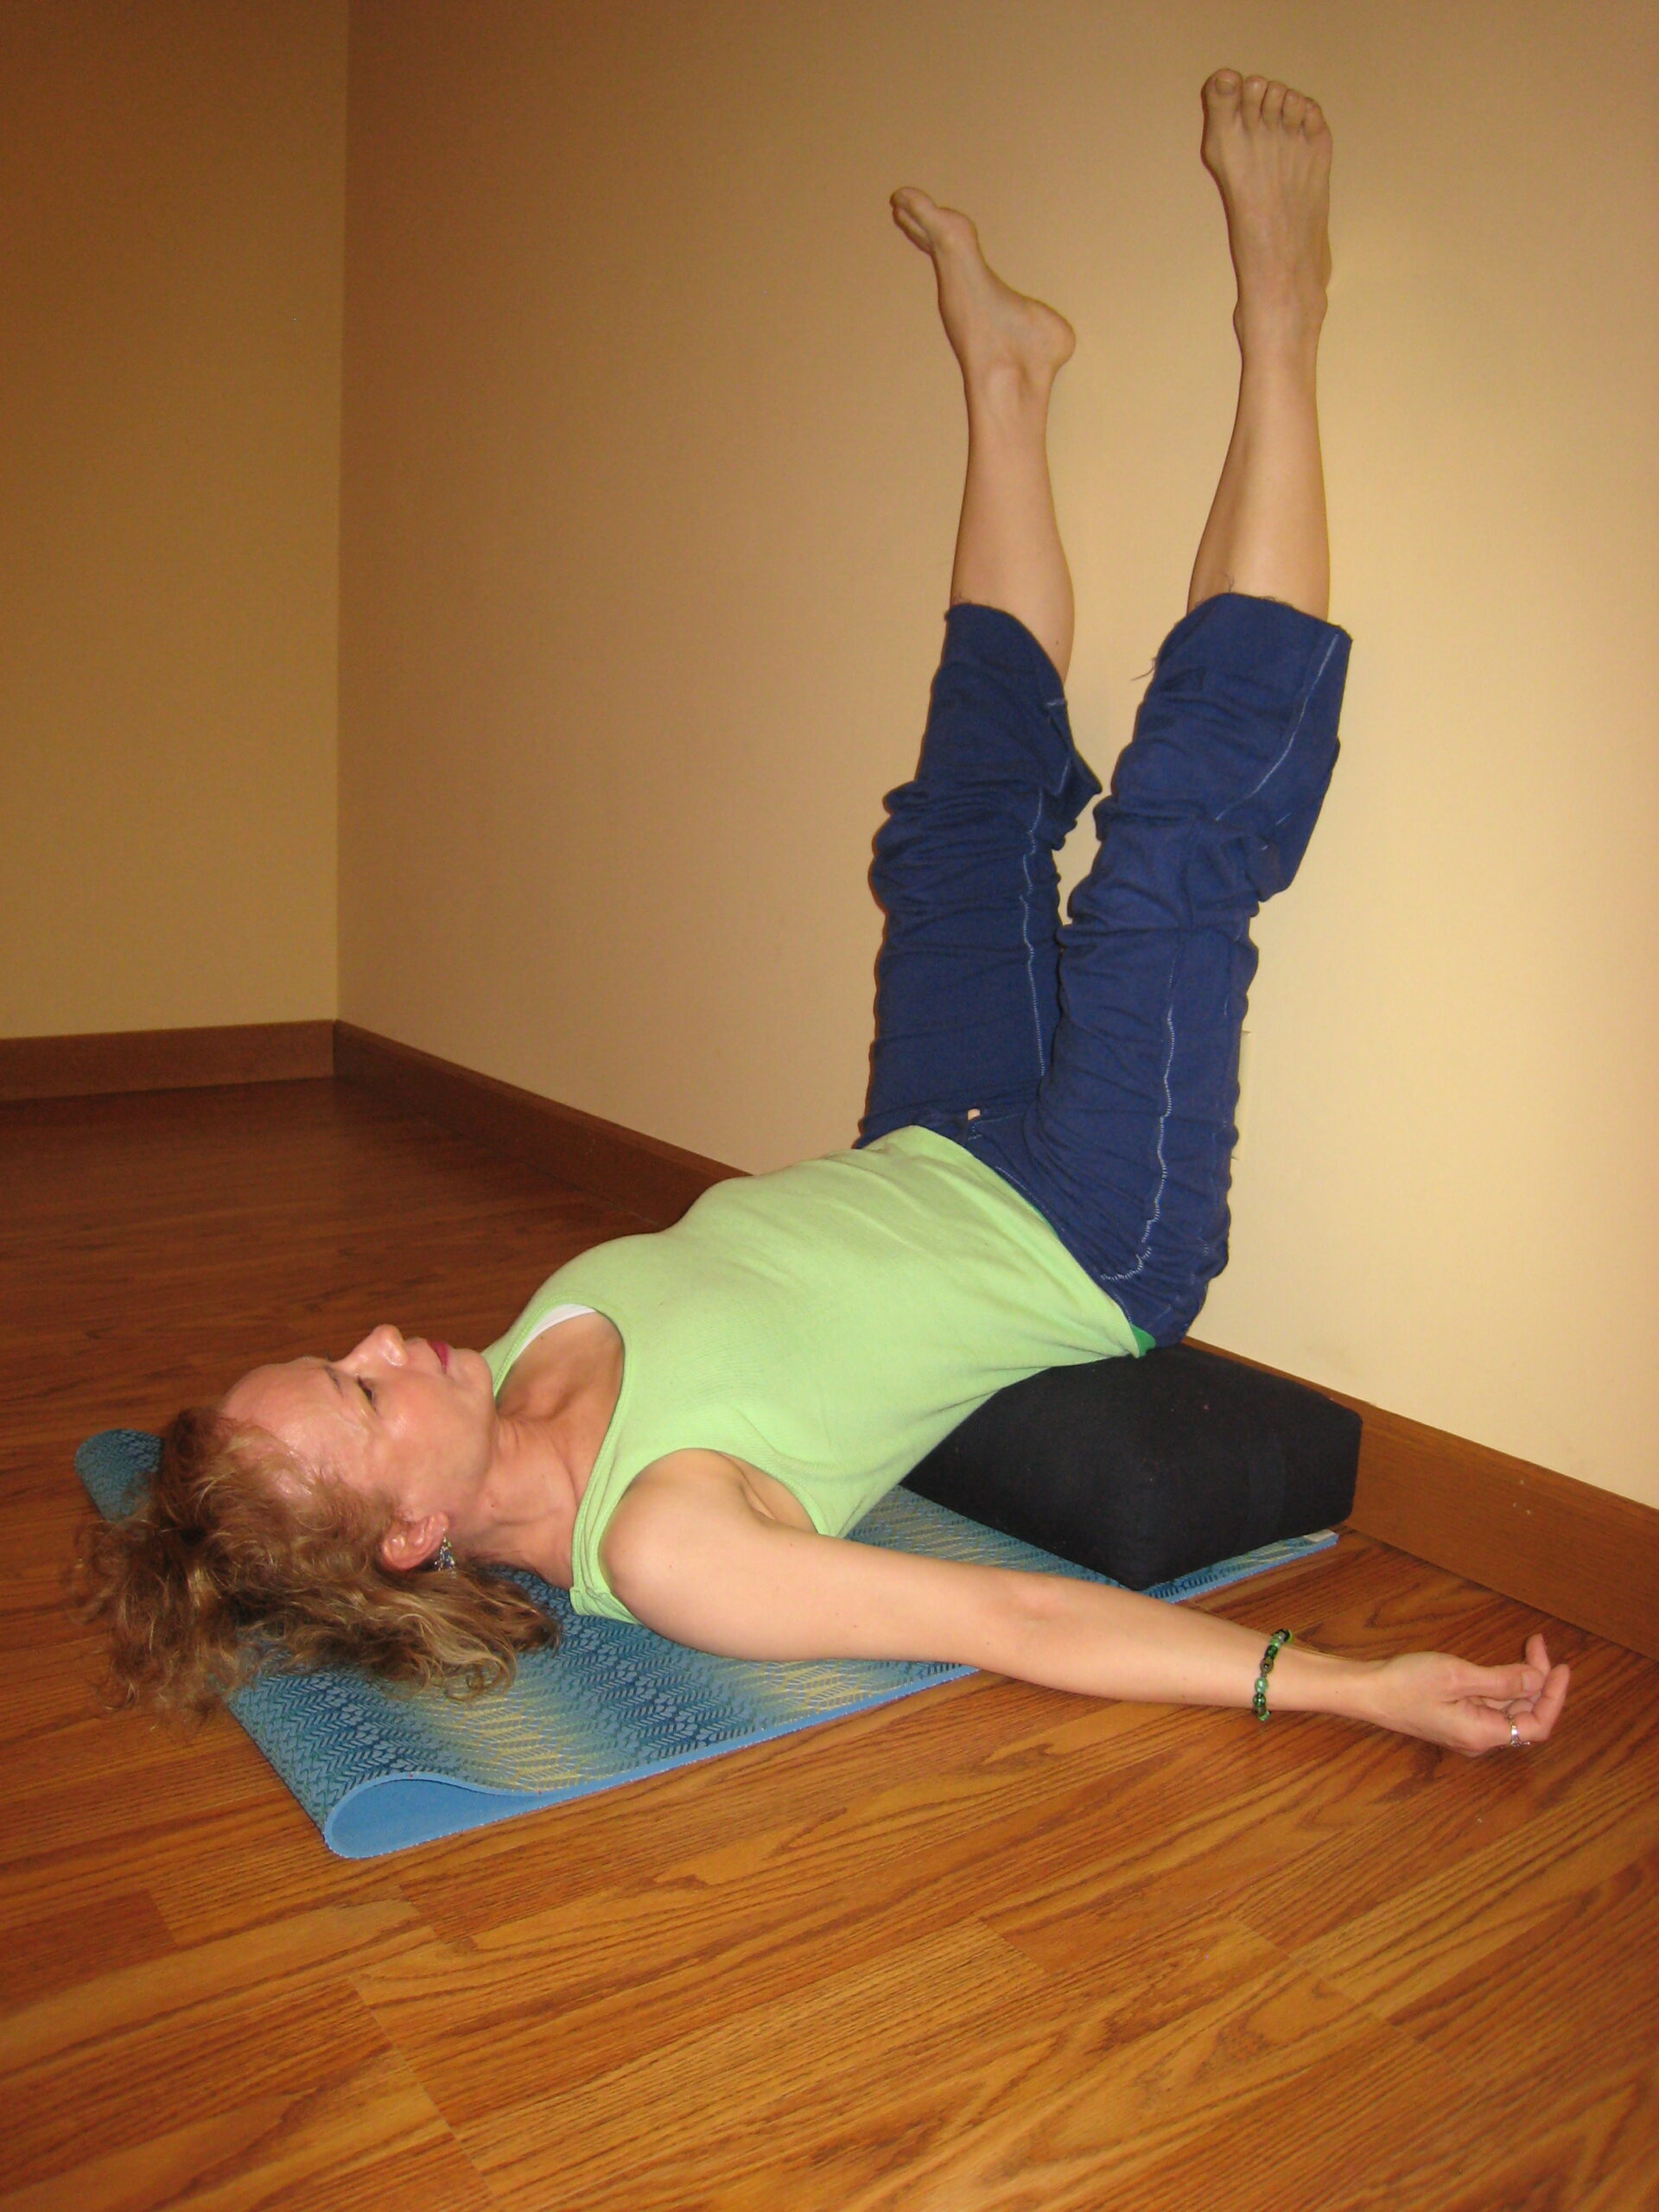 Viparita Karani - The Inverted Pose - yogawithpragya